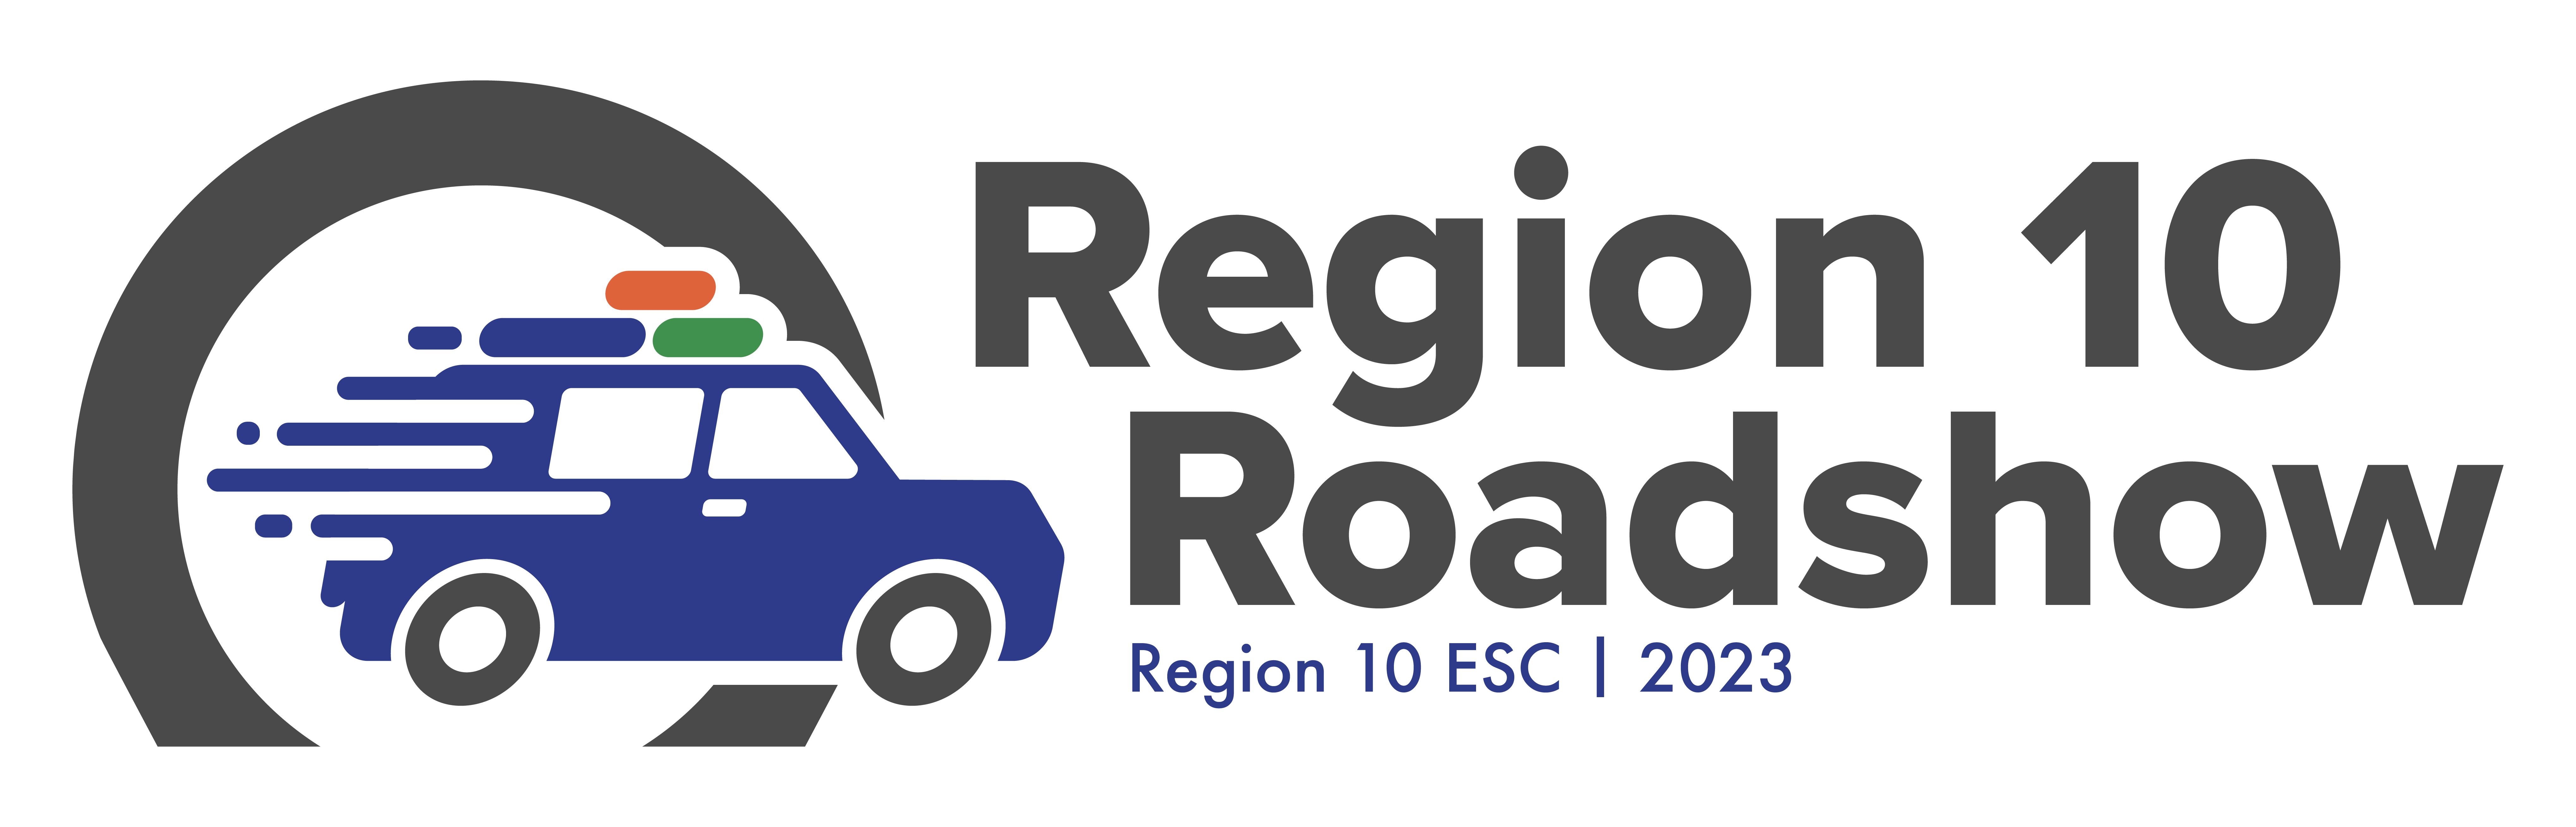 Region 10 Roadshow 2023